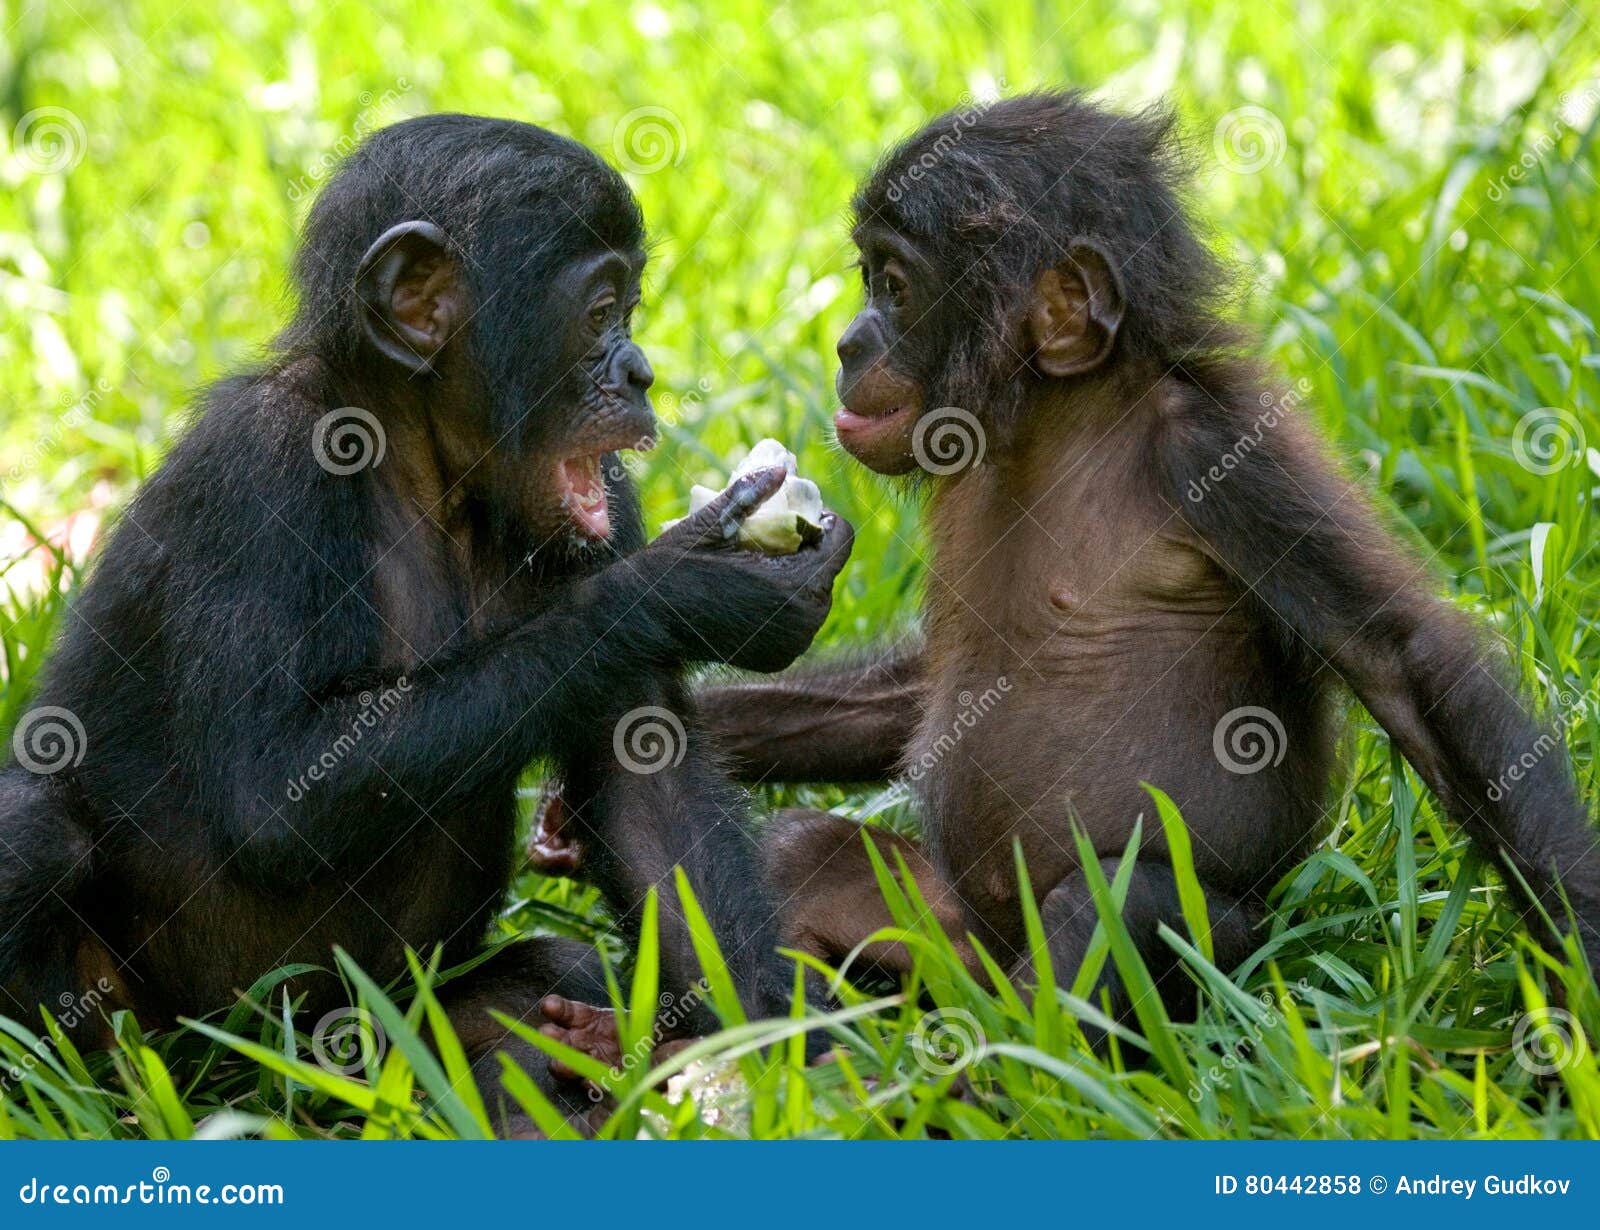 bonobos eating bamboo. democratic republic of congo. lola ya bonobo national park.